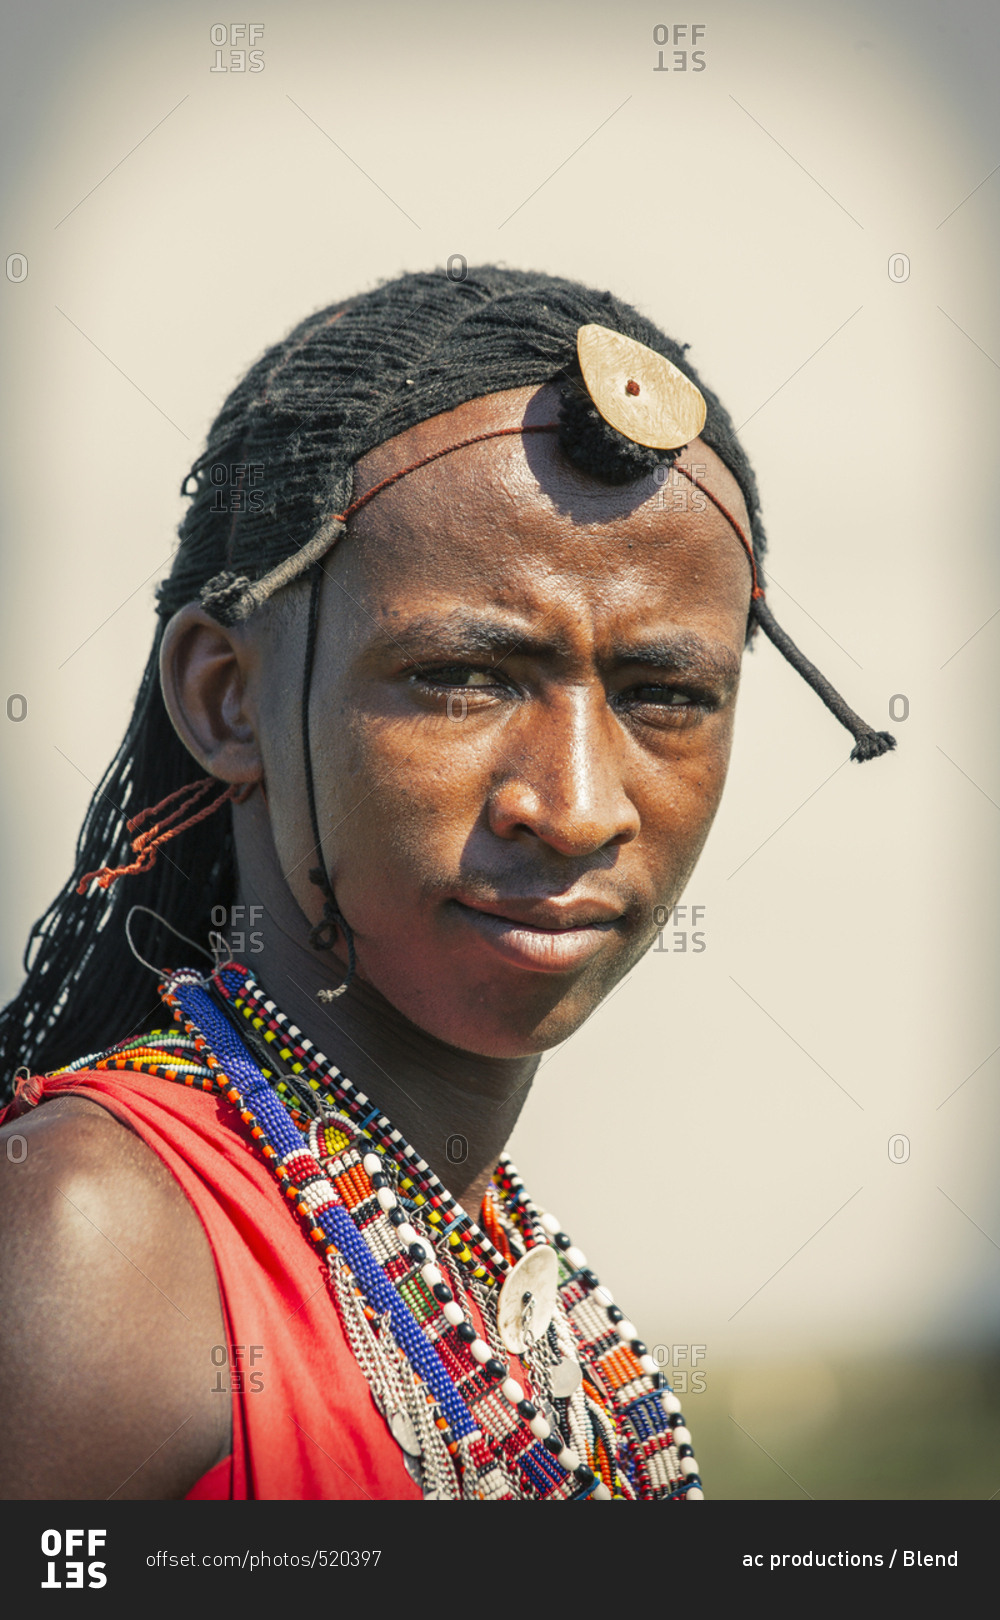 Black man wearing traditional clothing